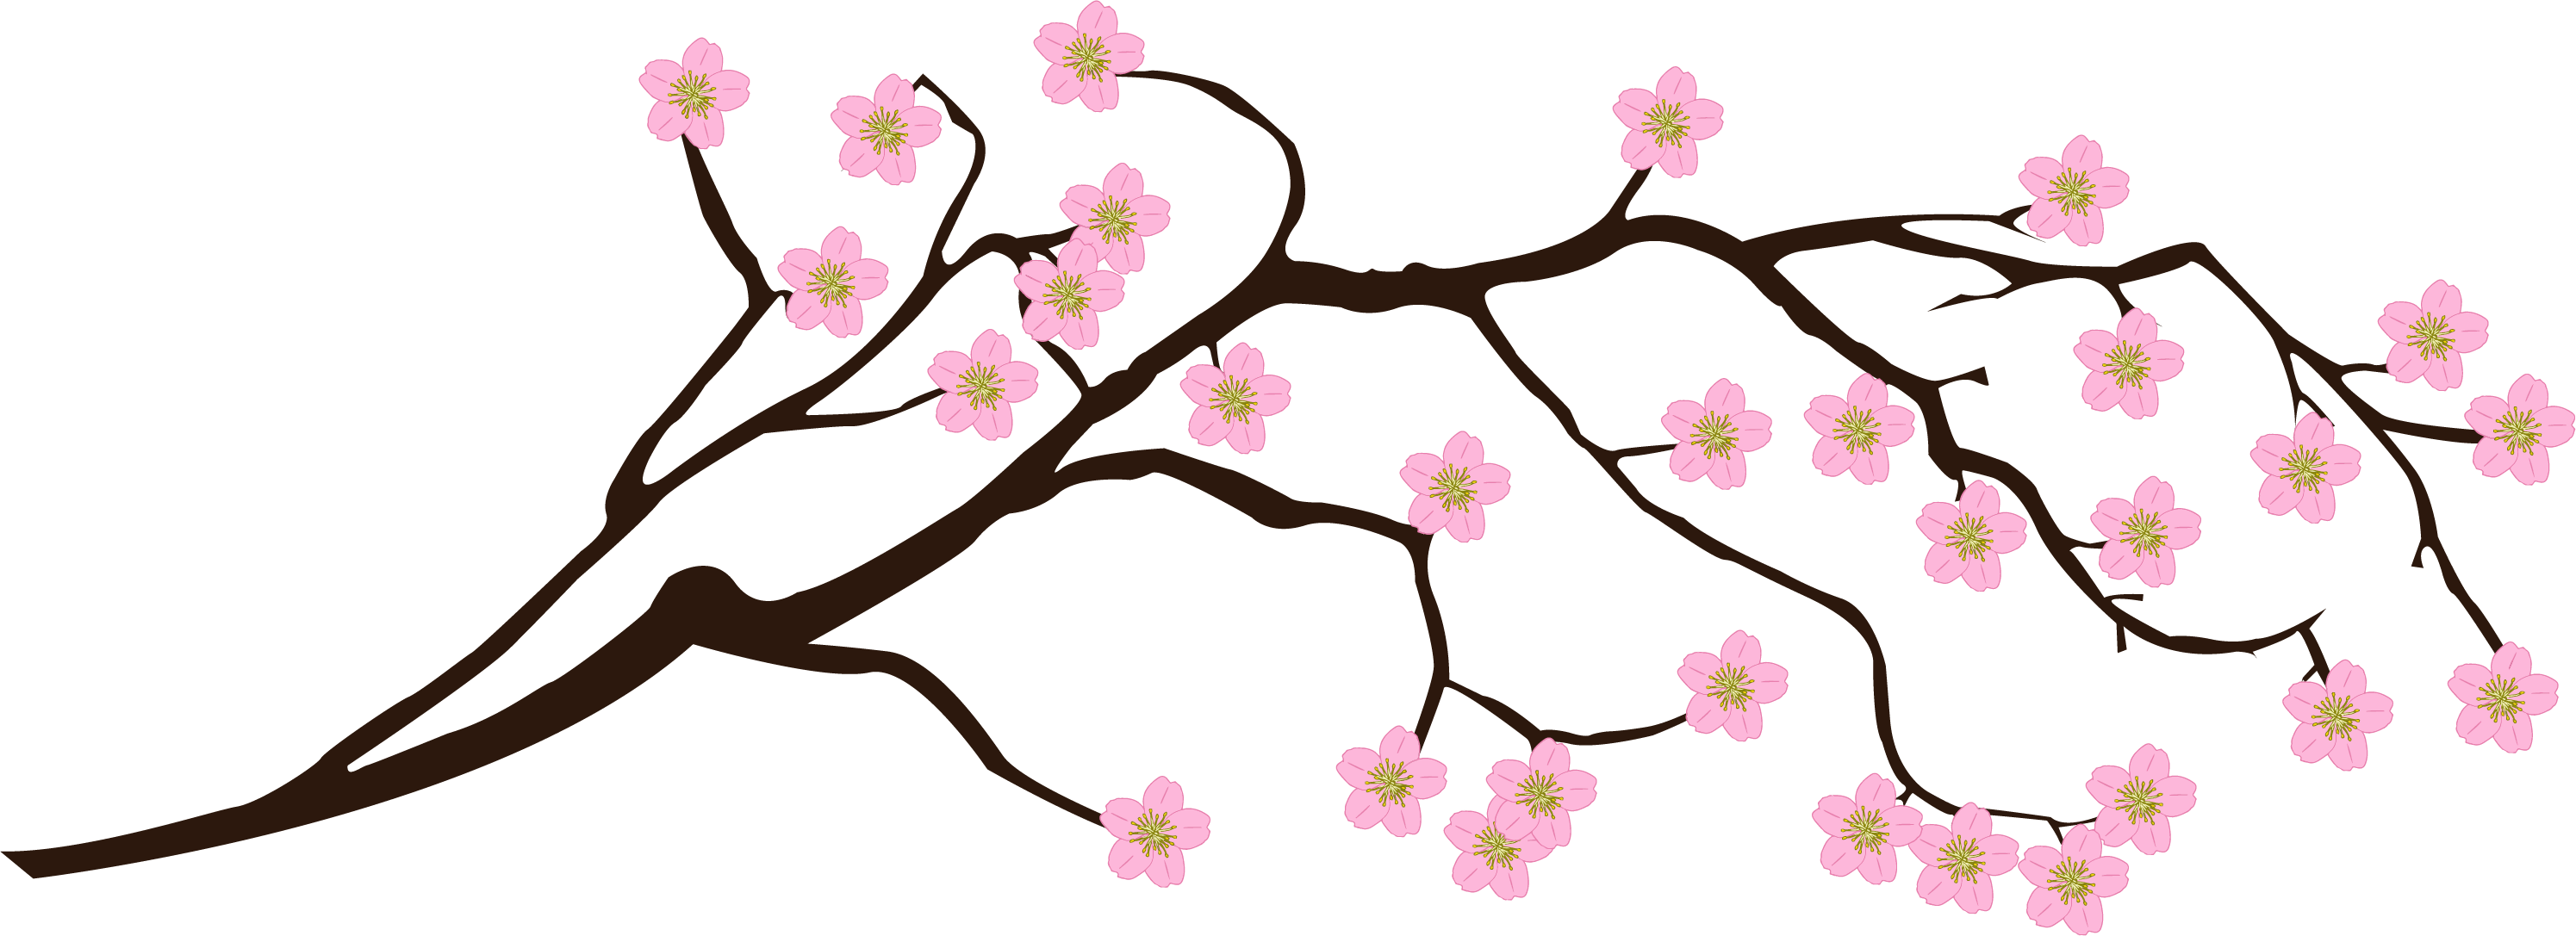 Arts Graphic - Cherry Blossom (2990x1087)